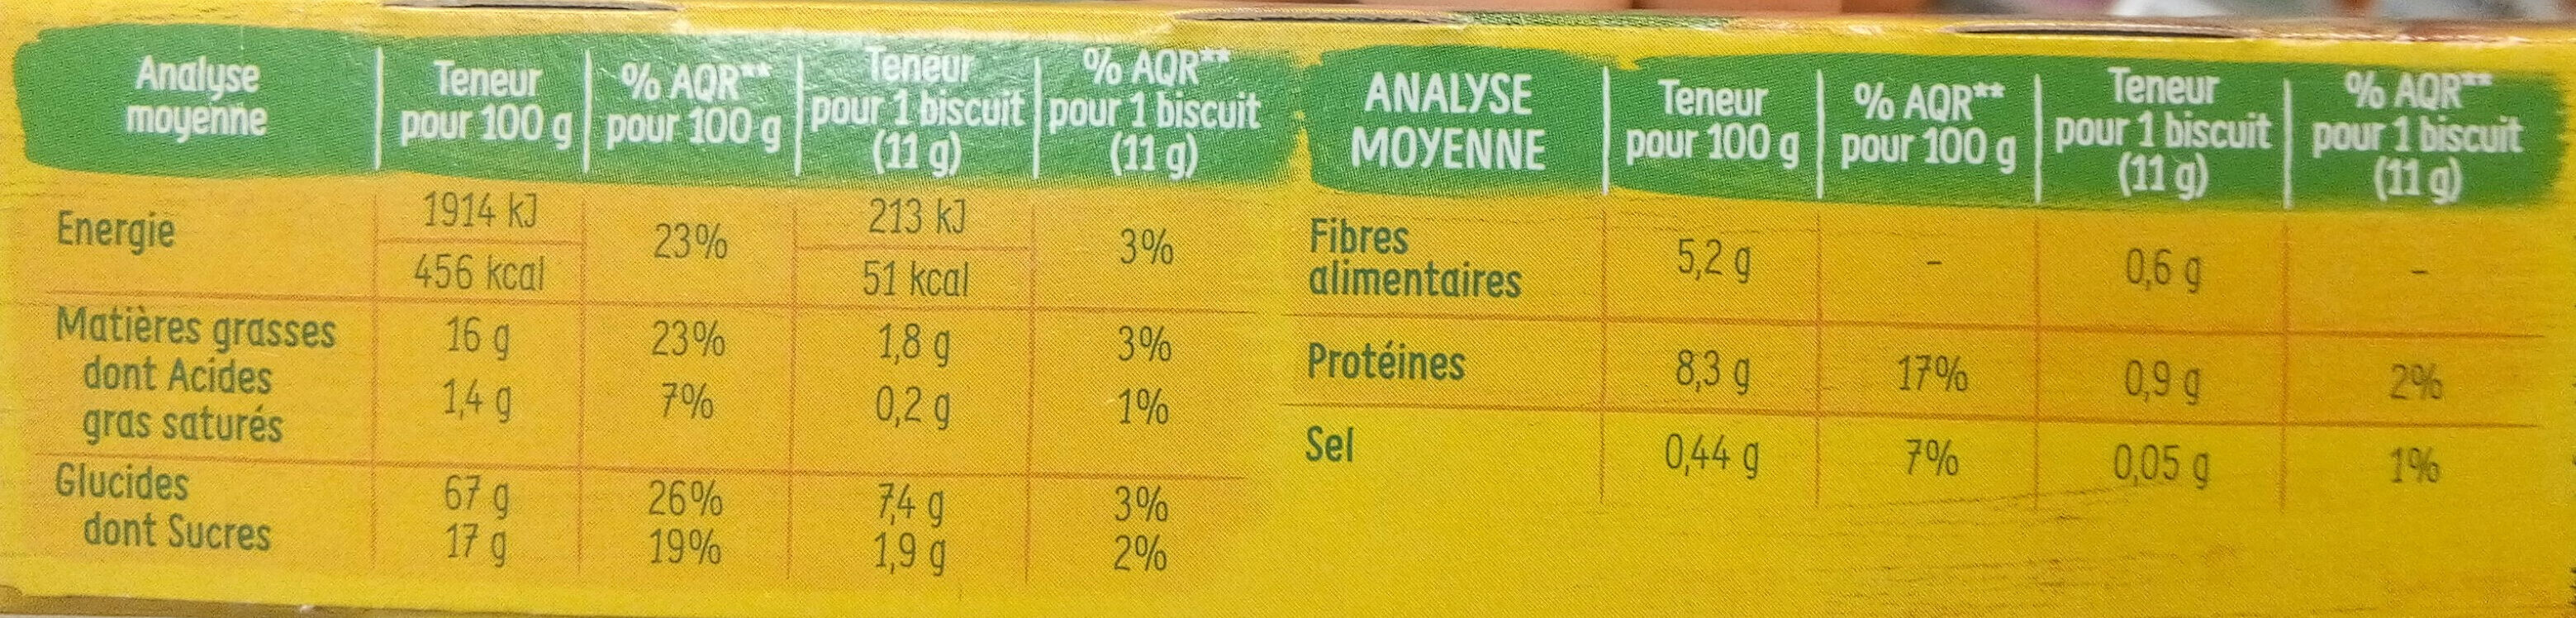 Gingembre saveur citron (biscuits) - Nutrition facts - fr